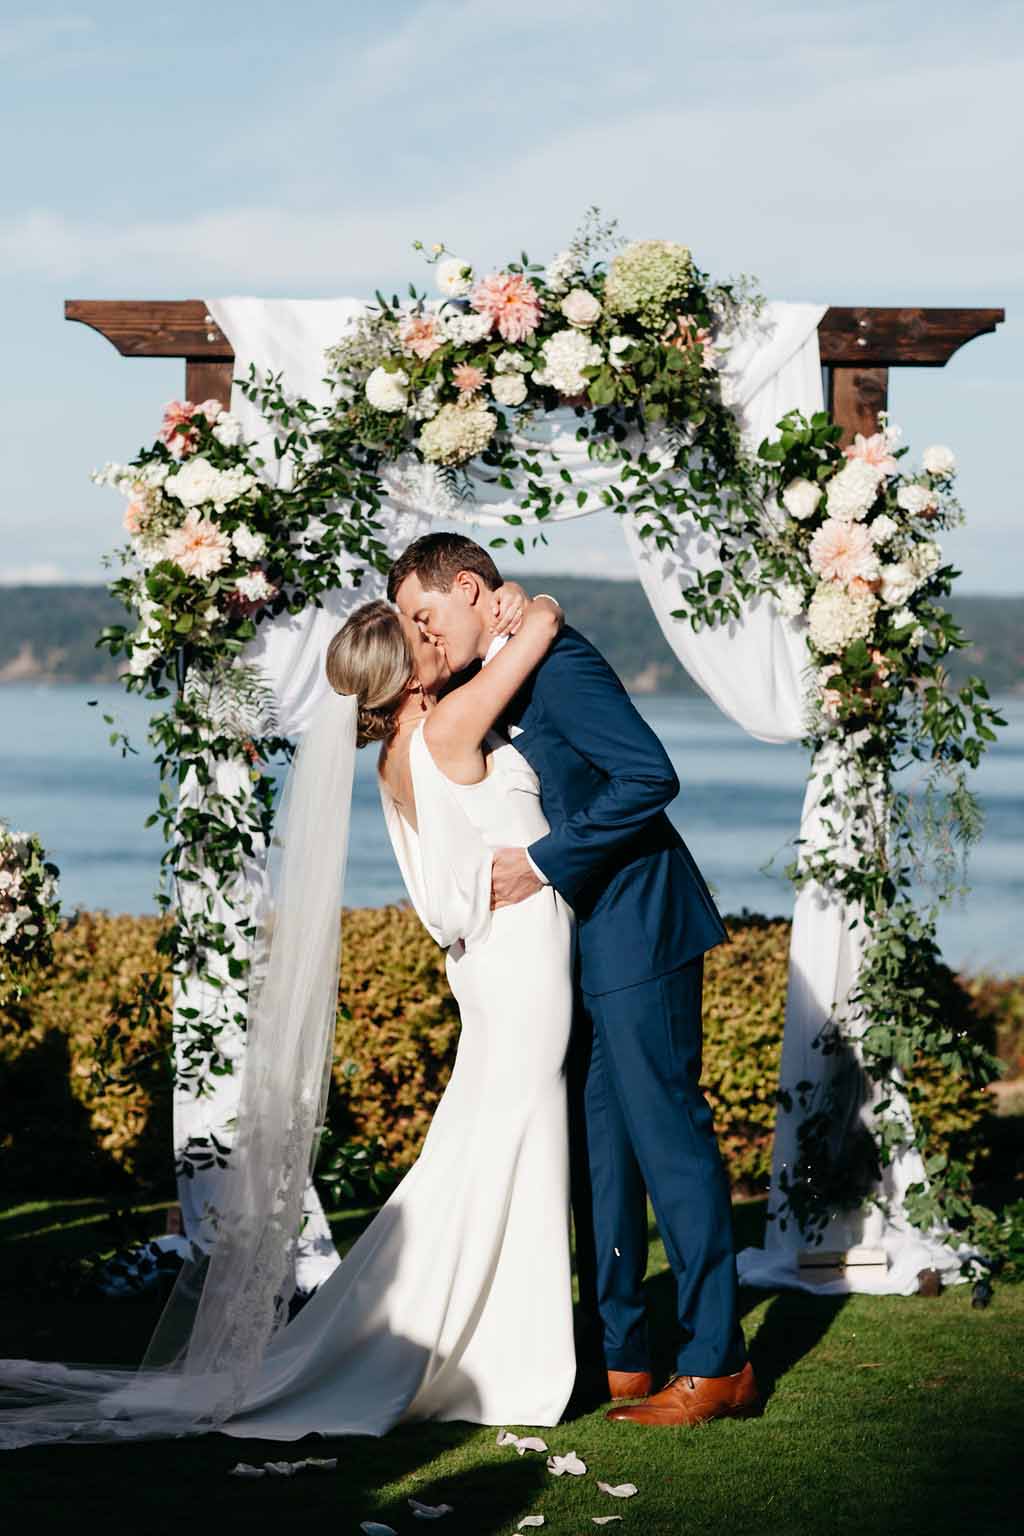 Wooden wedding arbor with drapes, greenery, and blush flowers - Elegant Seattle Garden Wedding by Flora Nova Design Seattle